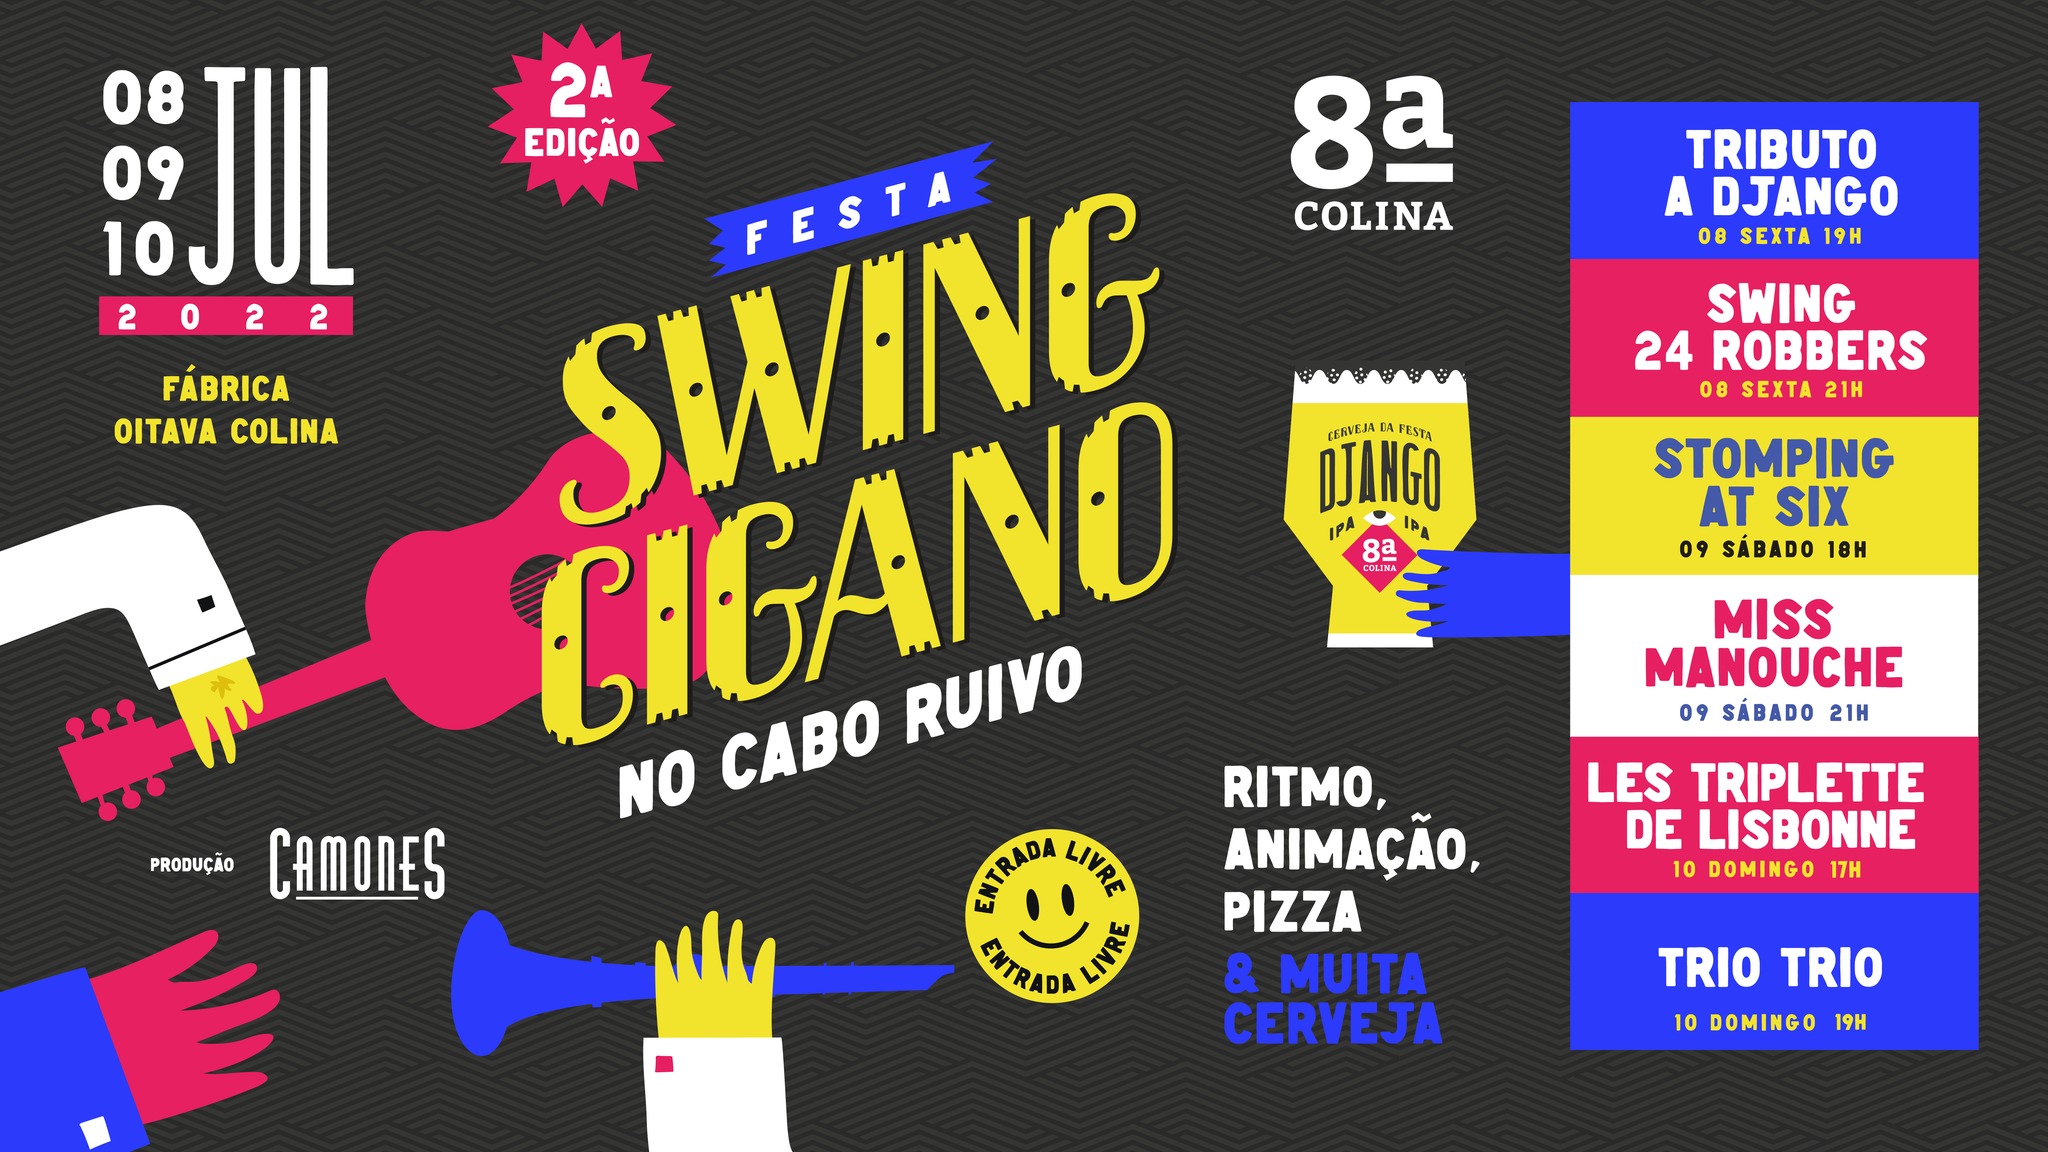 Swing Cigano